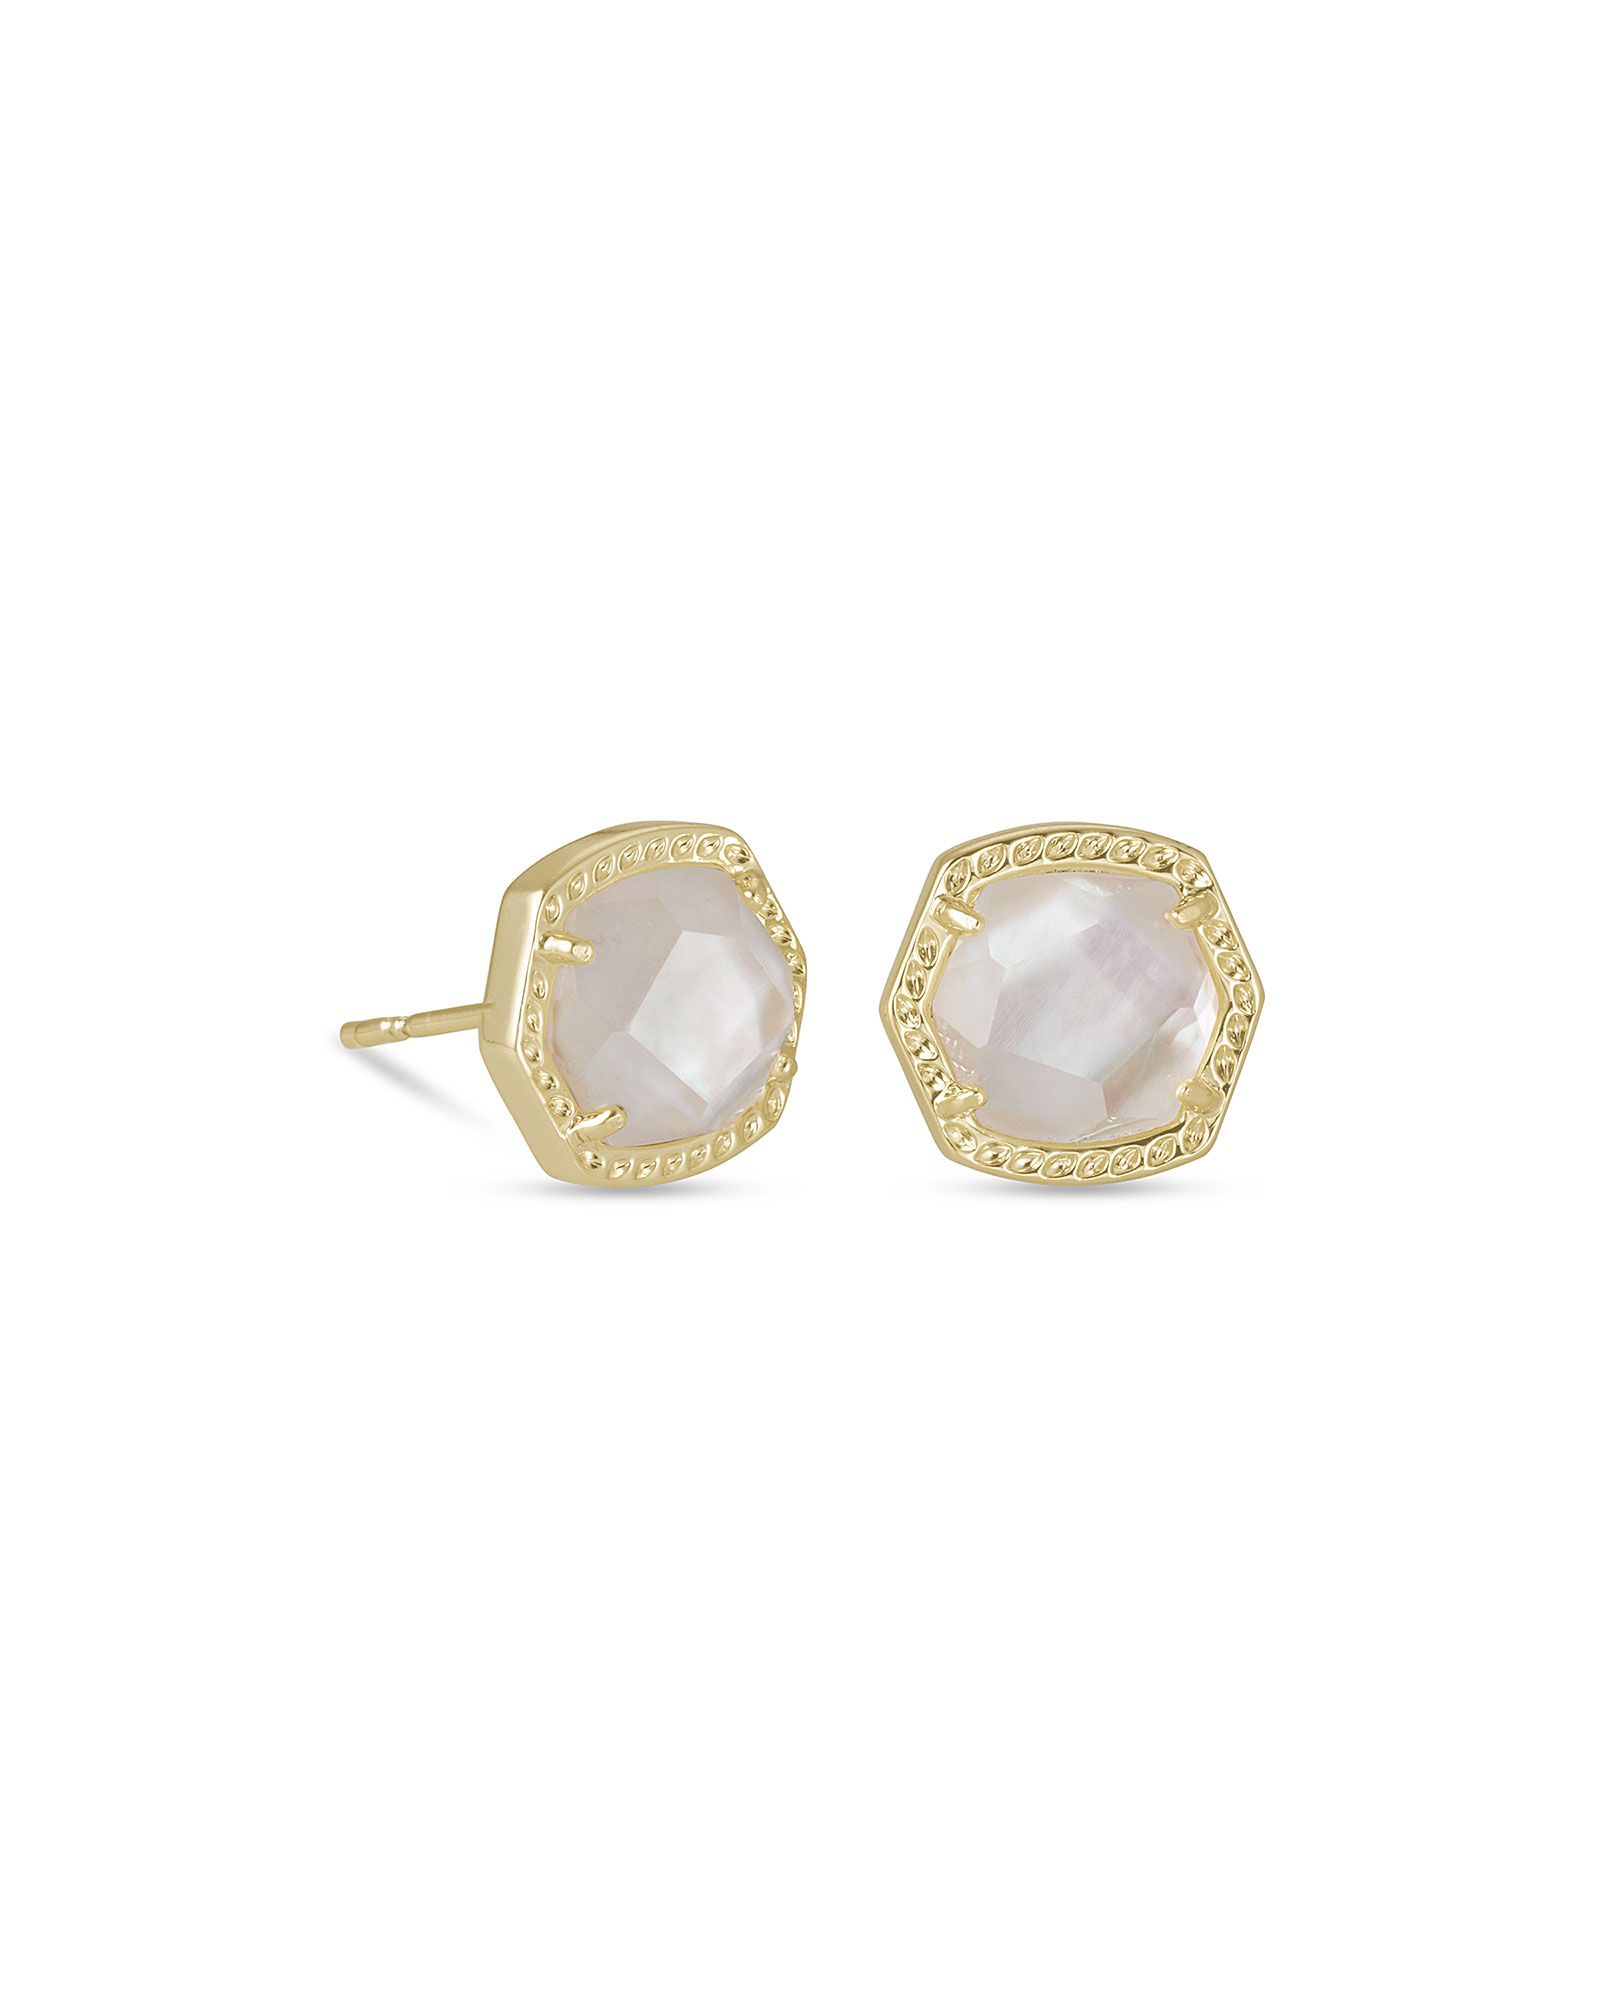 Davie Gold Stud Earrings in Ivory Mother-of-Pearl | Kendra Scott